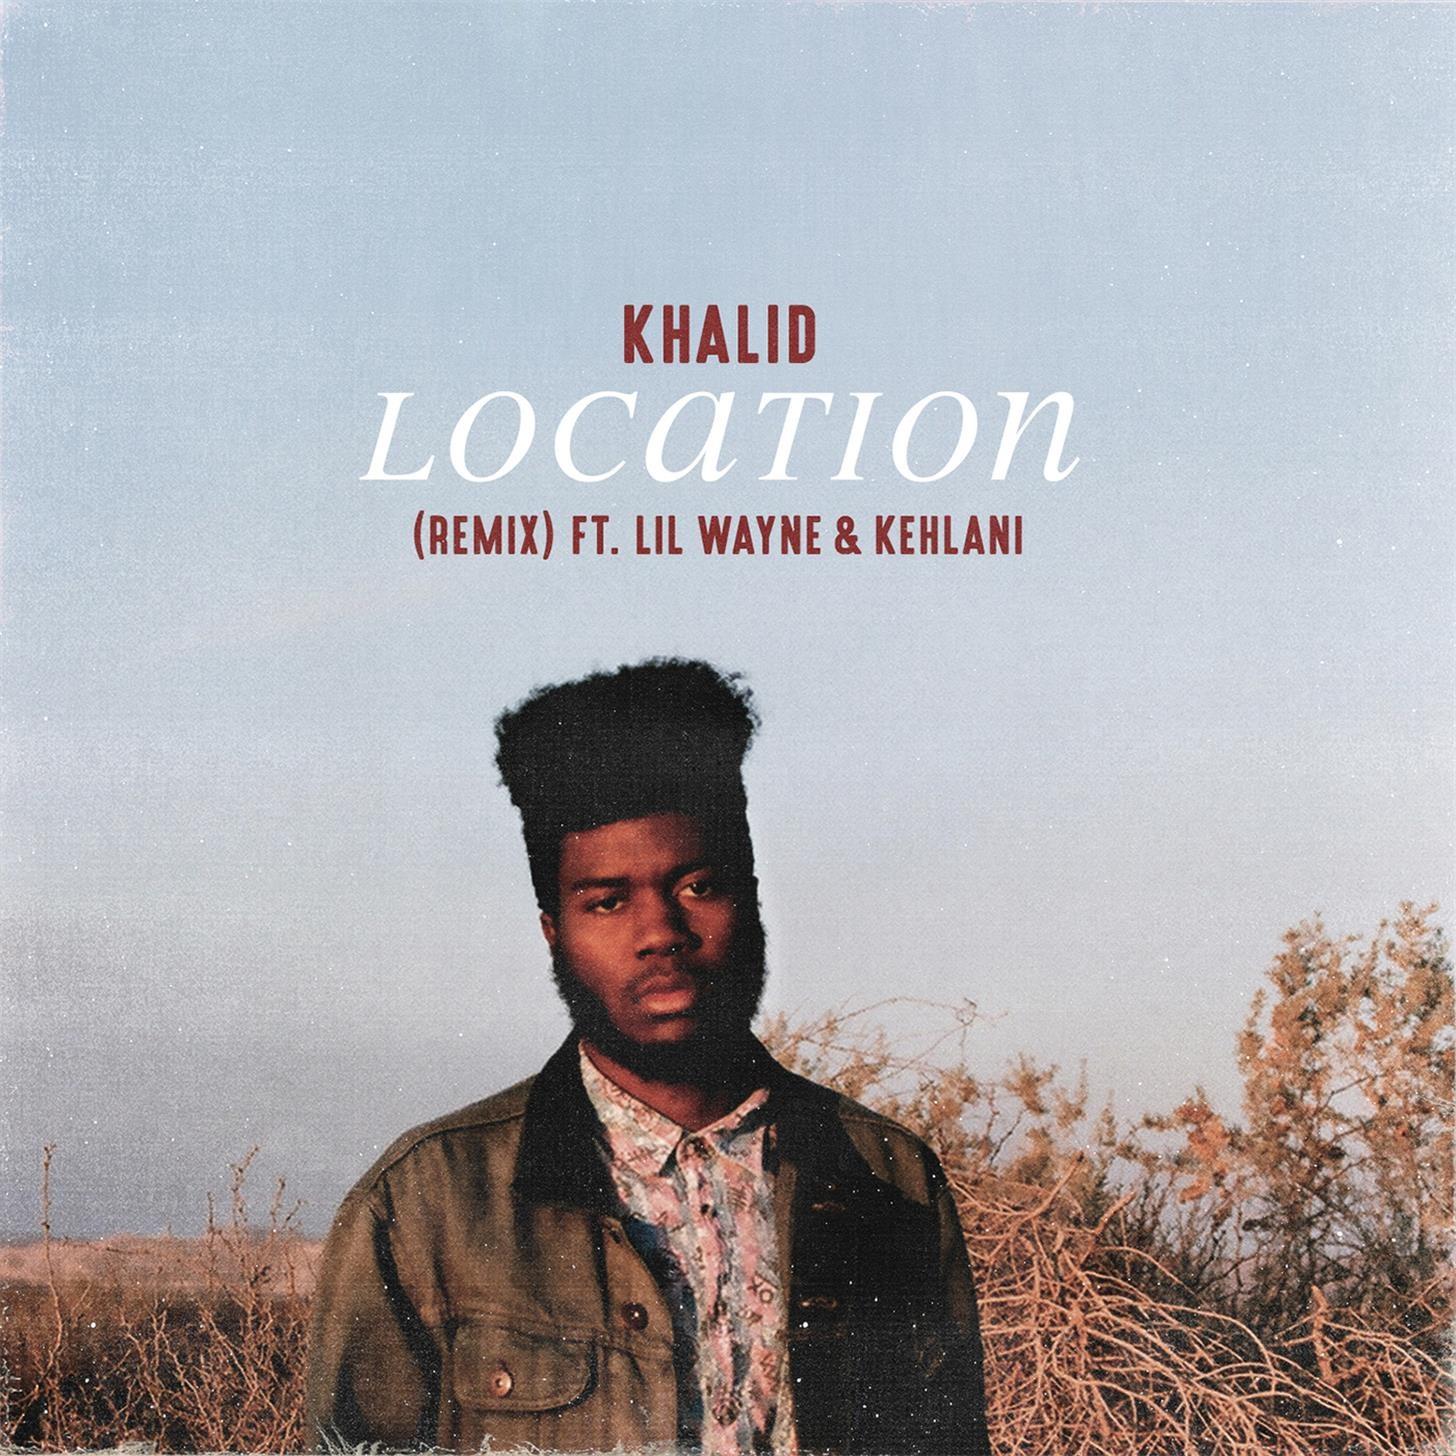 Location (Khalid Remix)